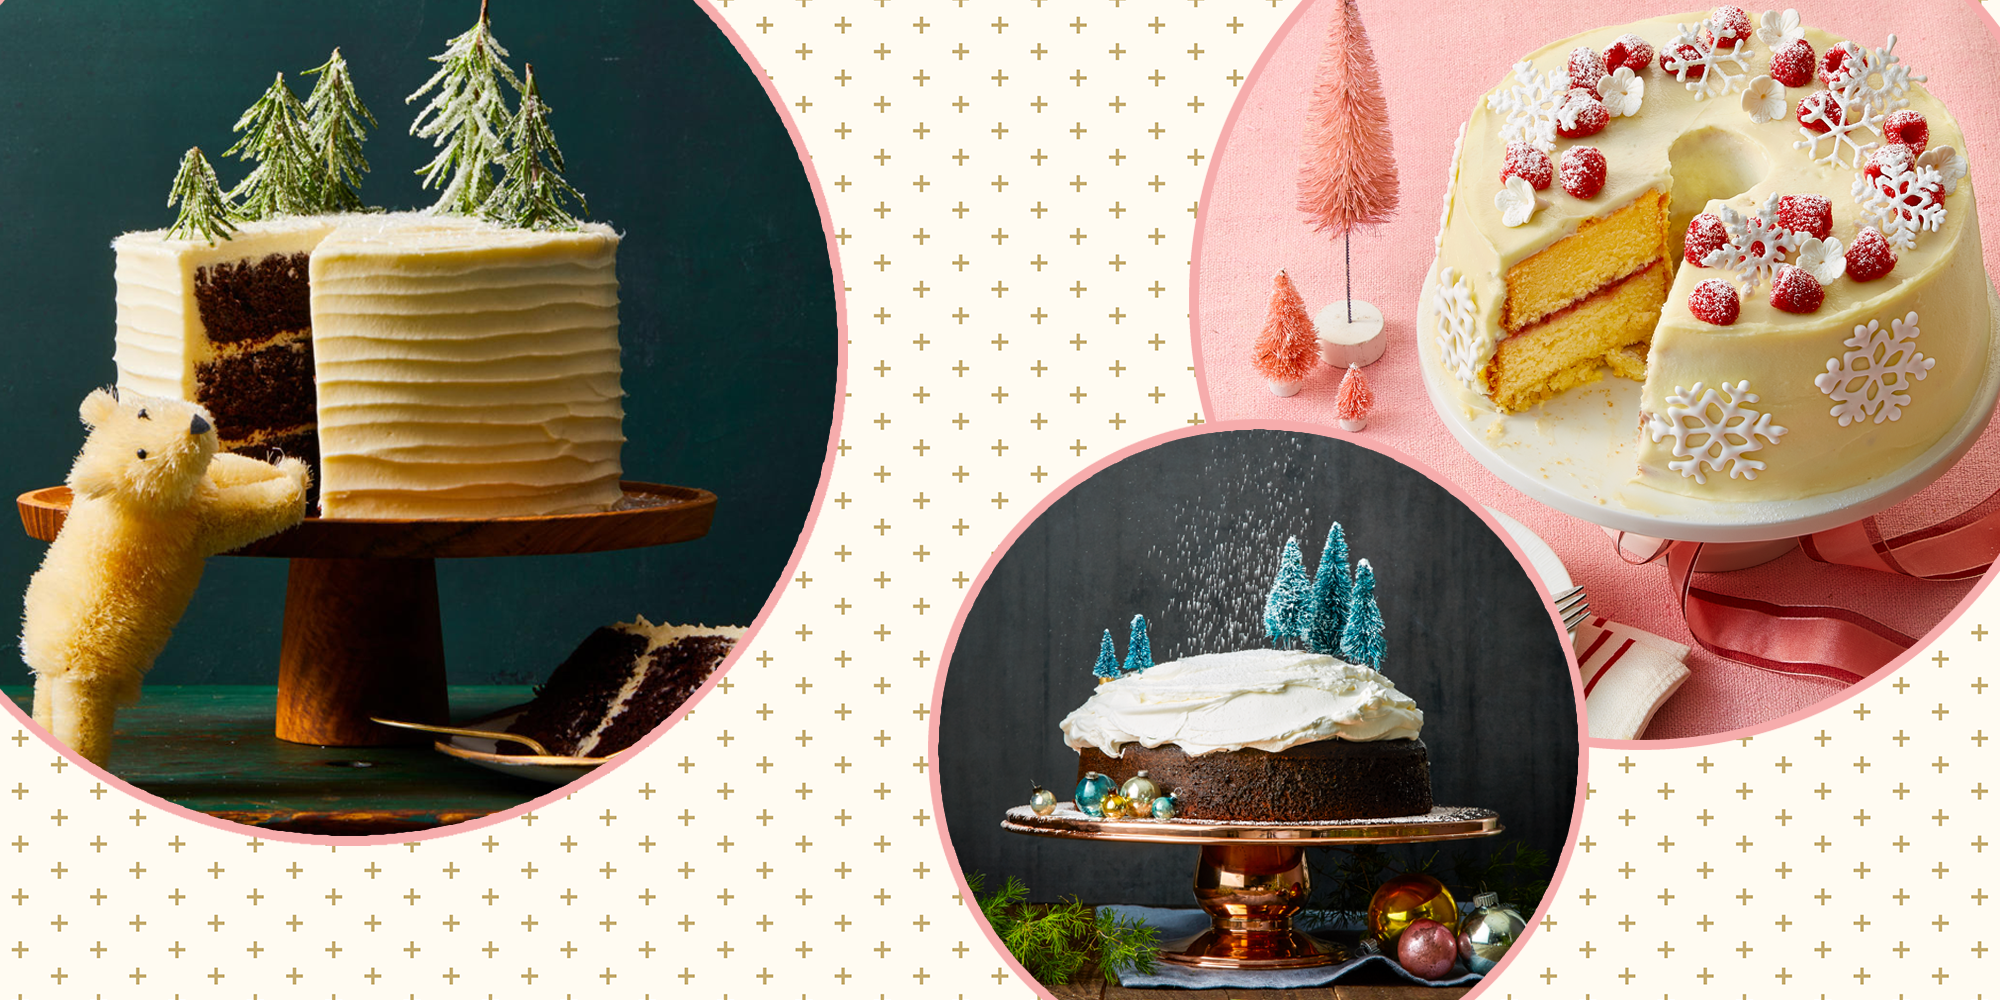 My Little Pony Cake Decorations | My Little Pony Cupcake Topper | Cake